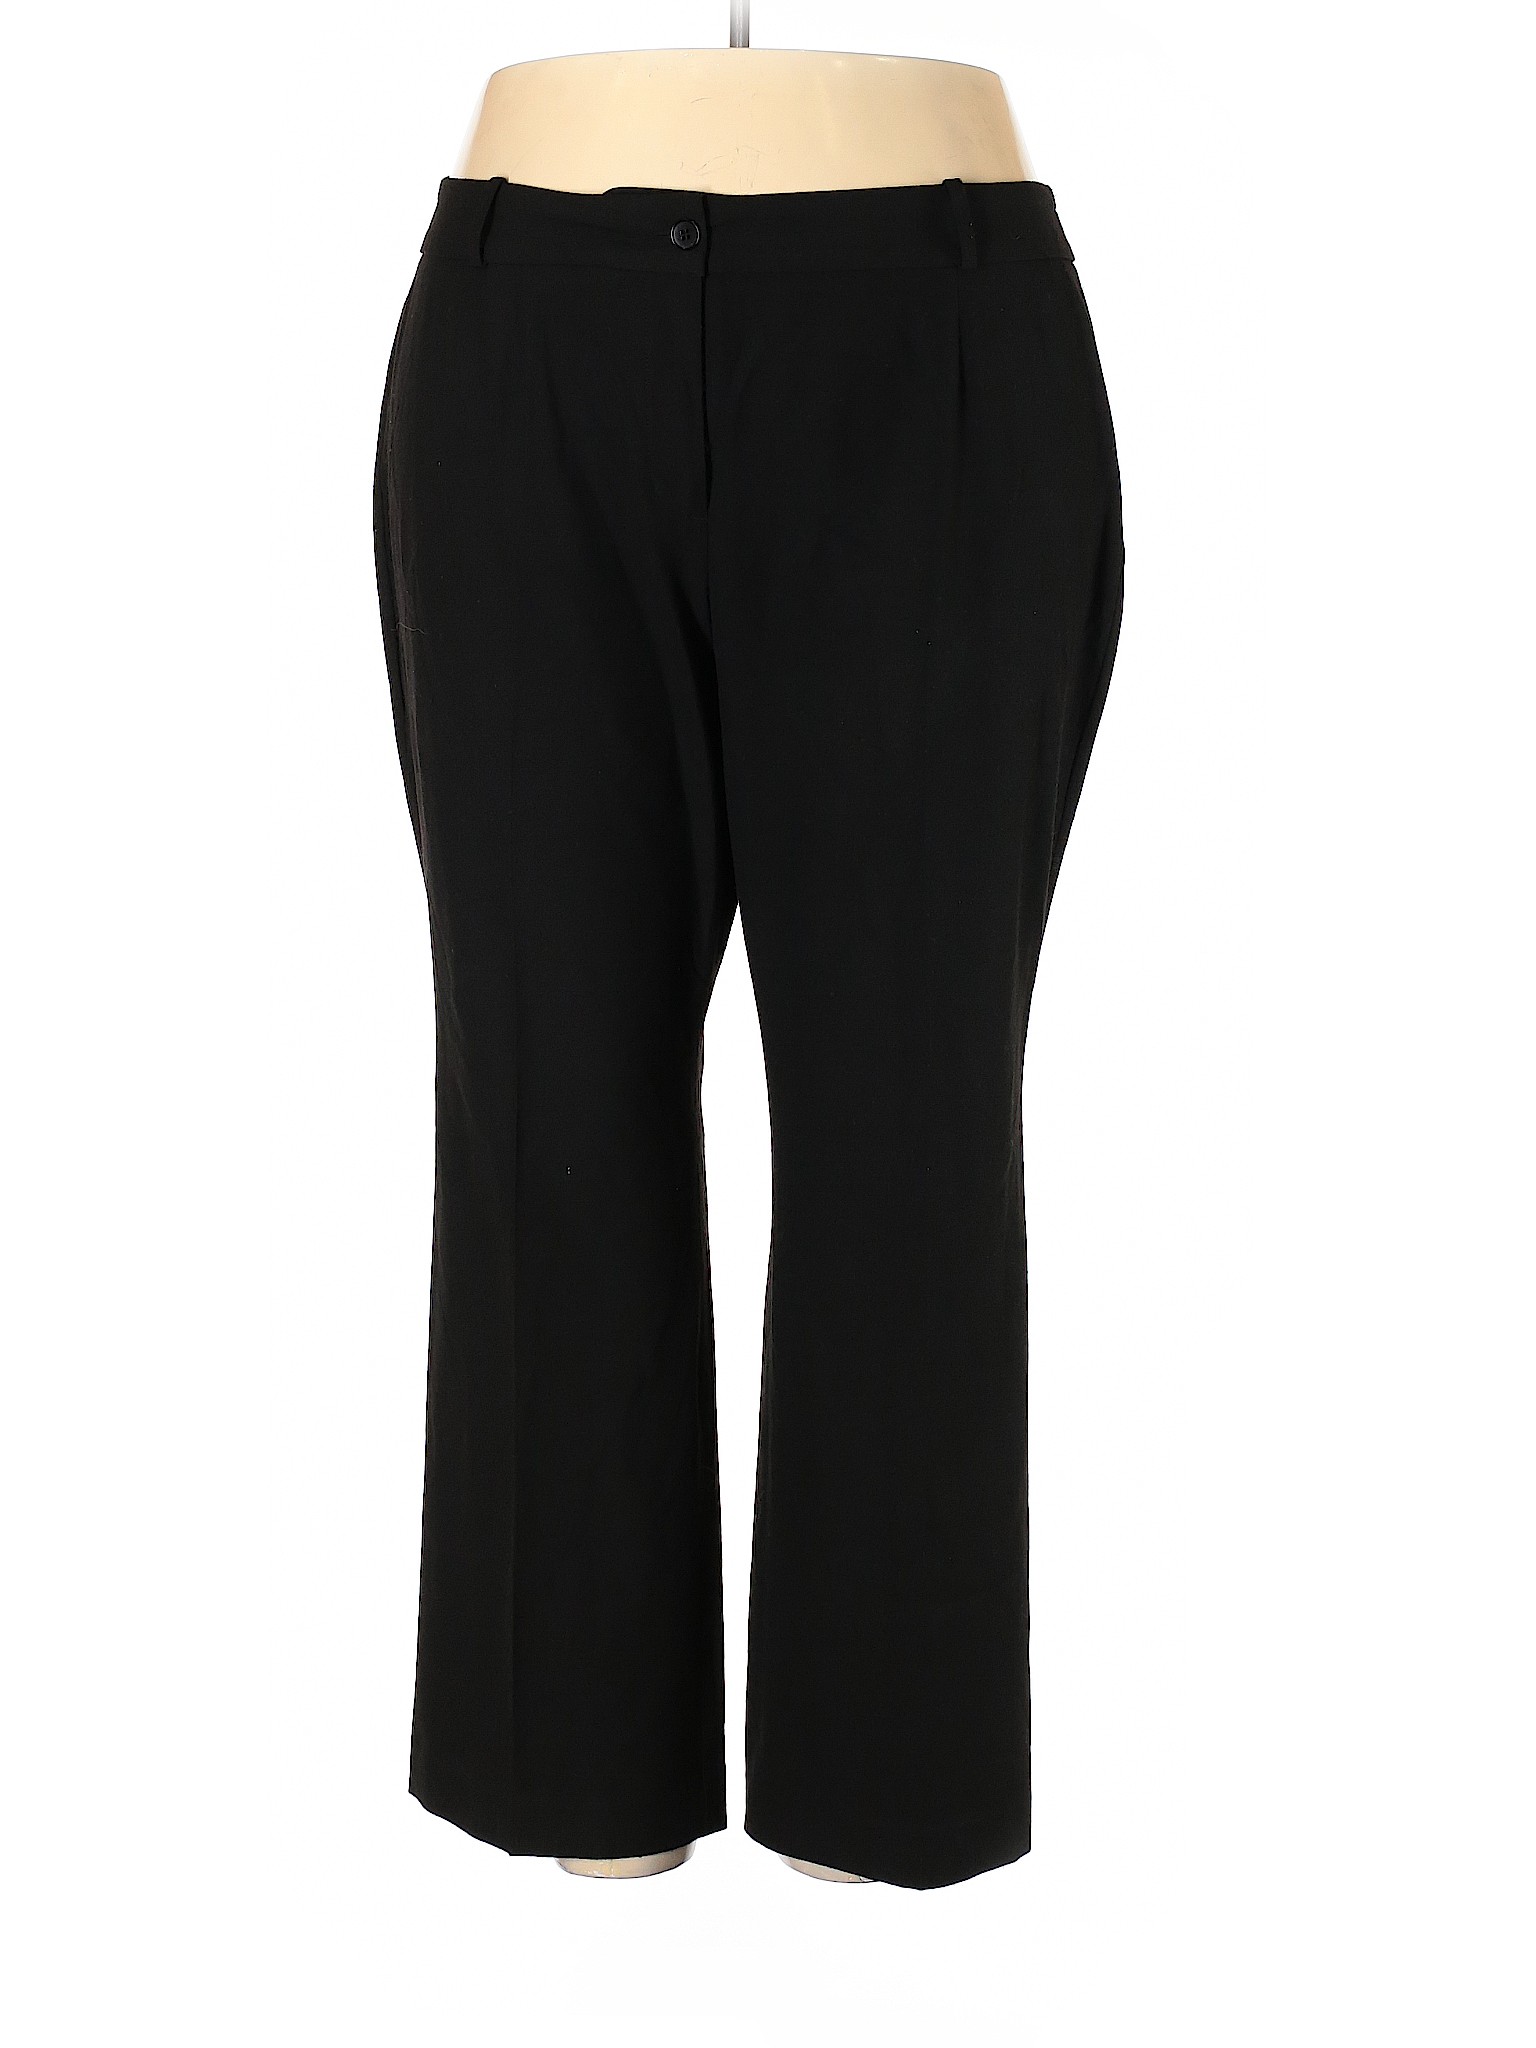 Talbots Women Black Dress Pants 20 Plus | eBay